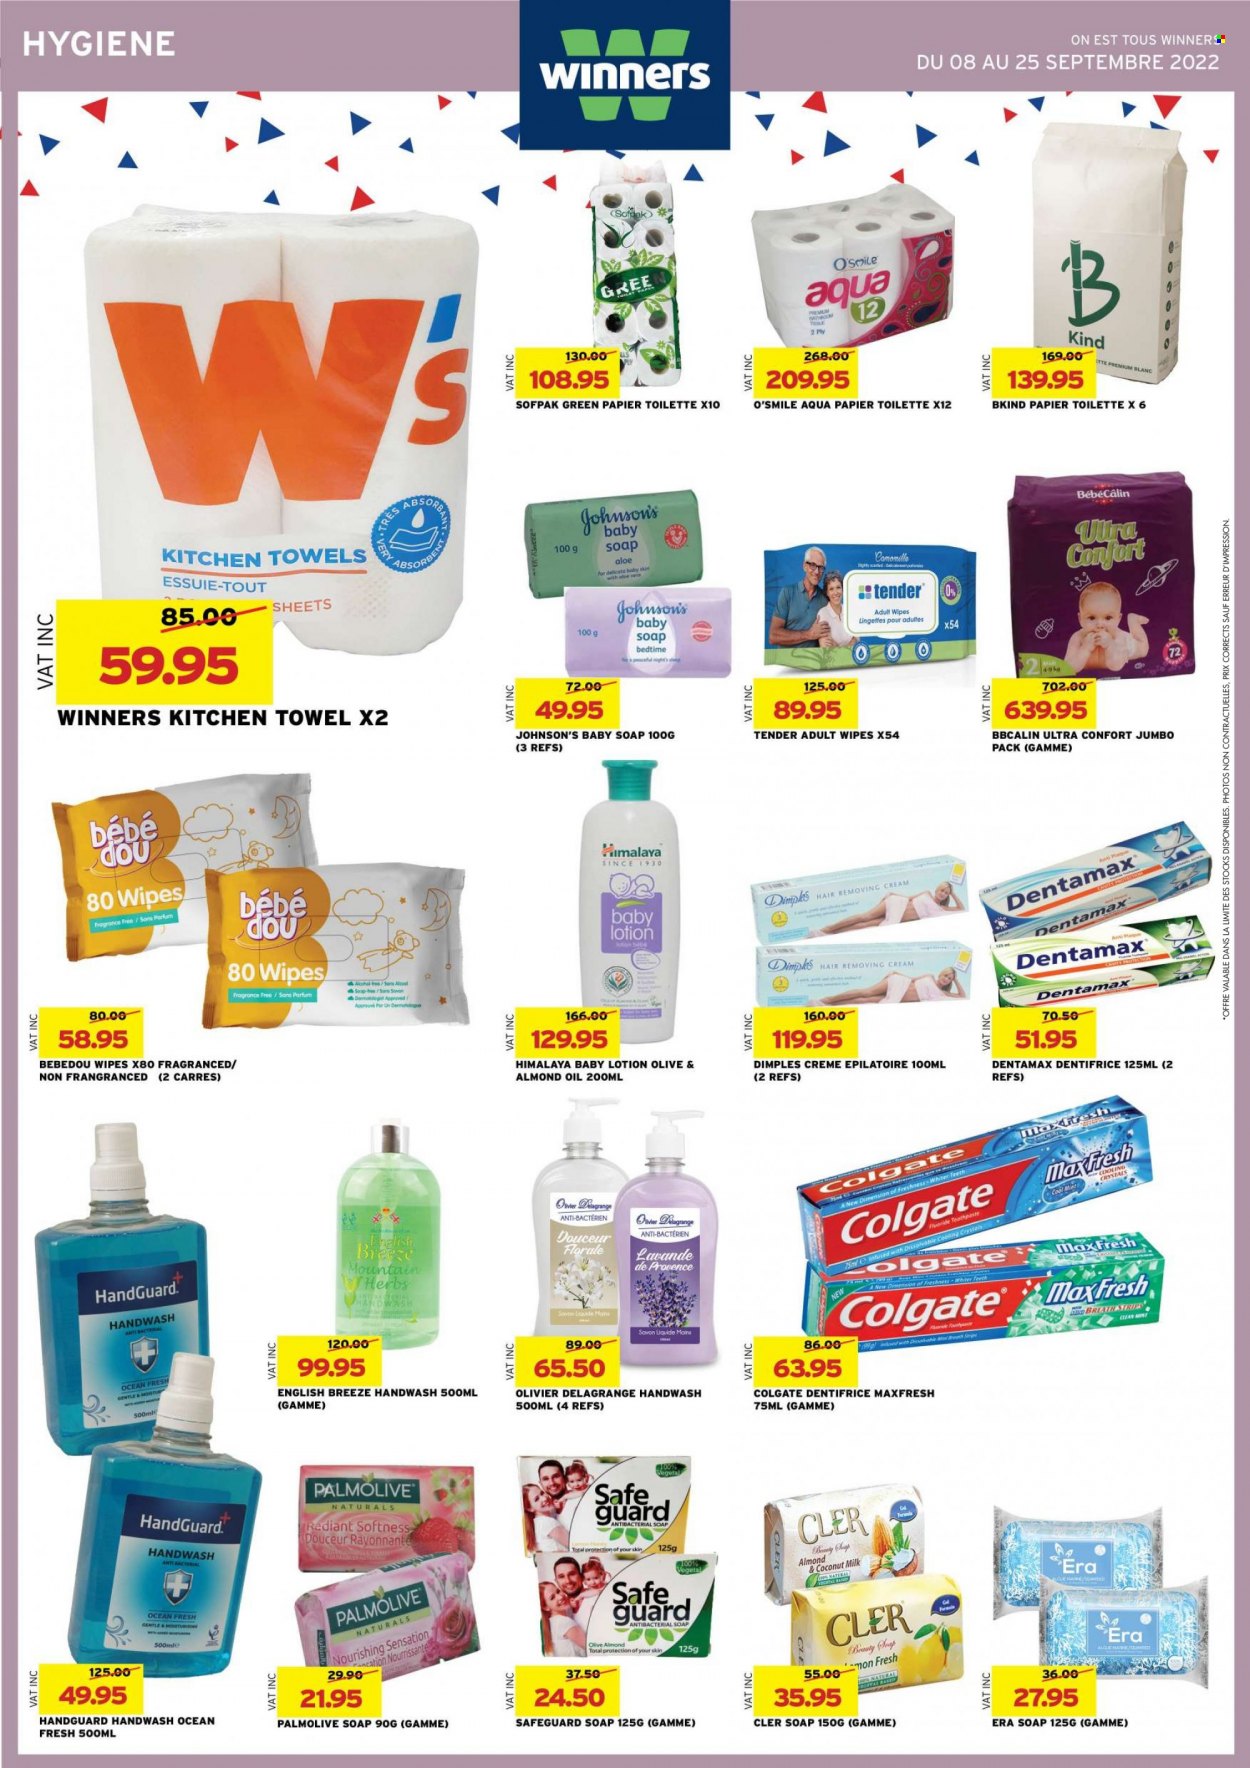 <magasin> - <du DD/MM/YYYY au DD/MM/YYYY> - Produits soldés - ,<products from flyers>. Page 31. 